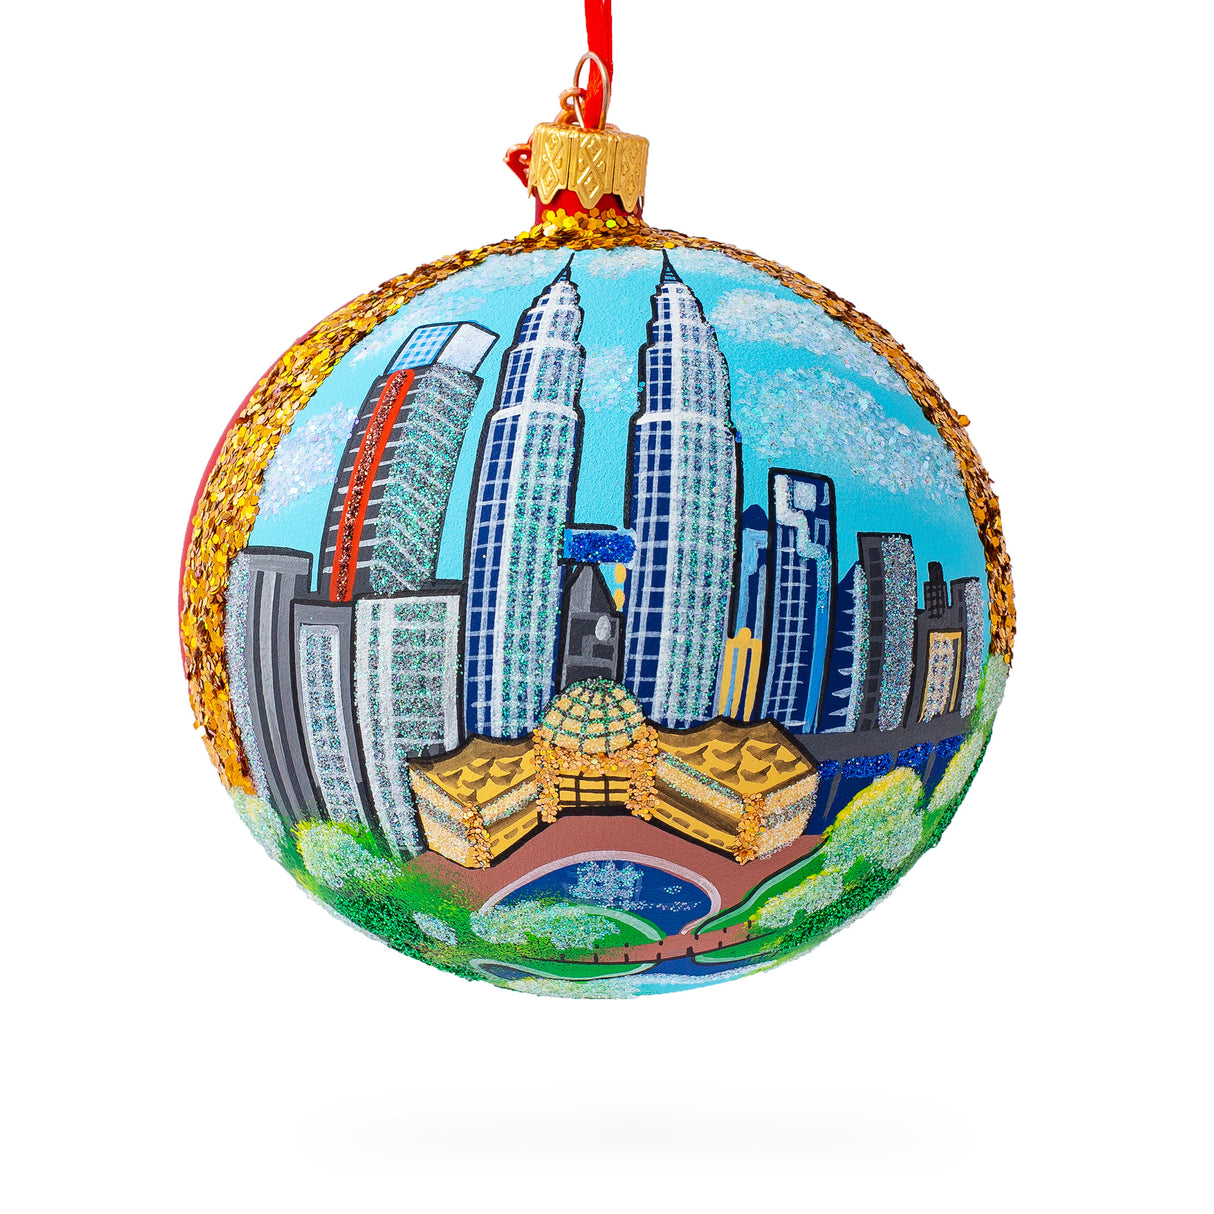 Petronas Twin Towers, Kuala Lumpur, Malaysia Glass Ball Christmas Ornament 4 Inches in Multi color, Round shape